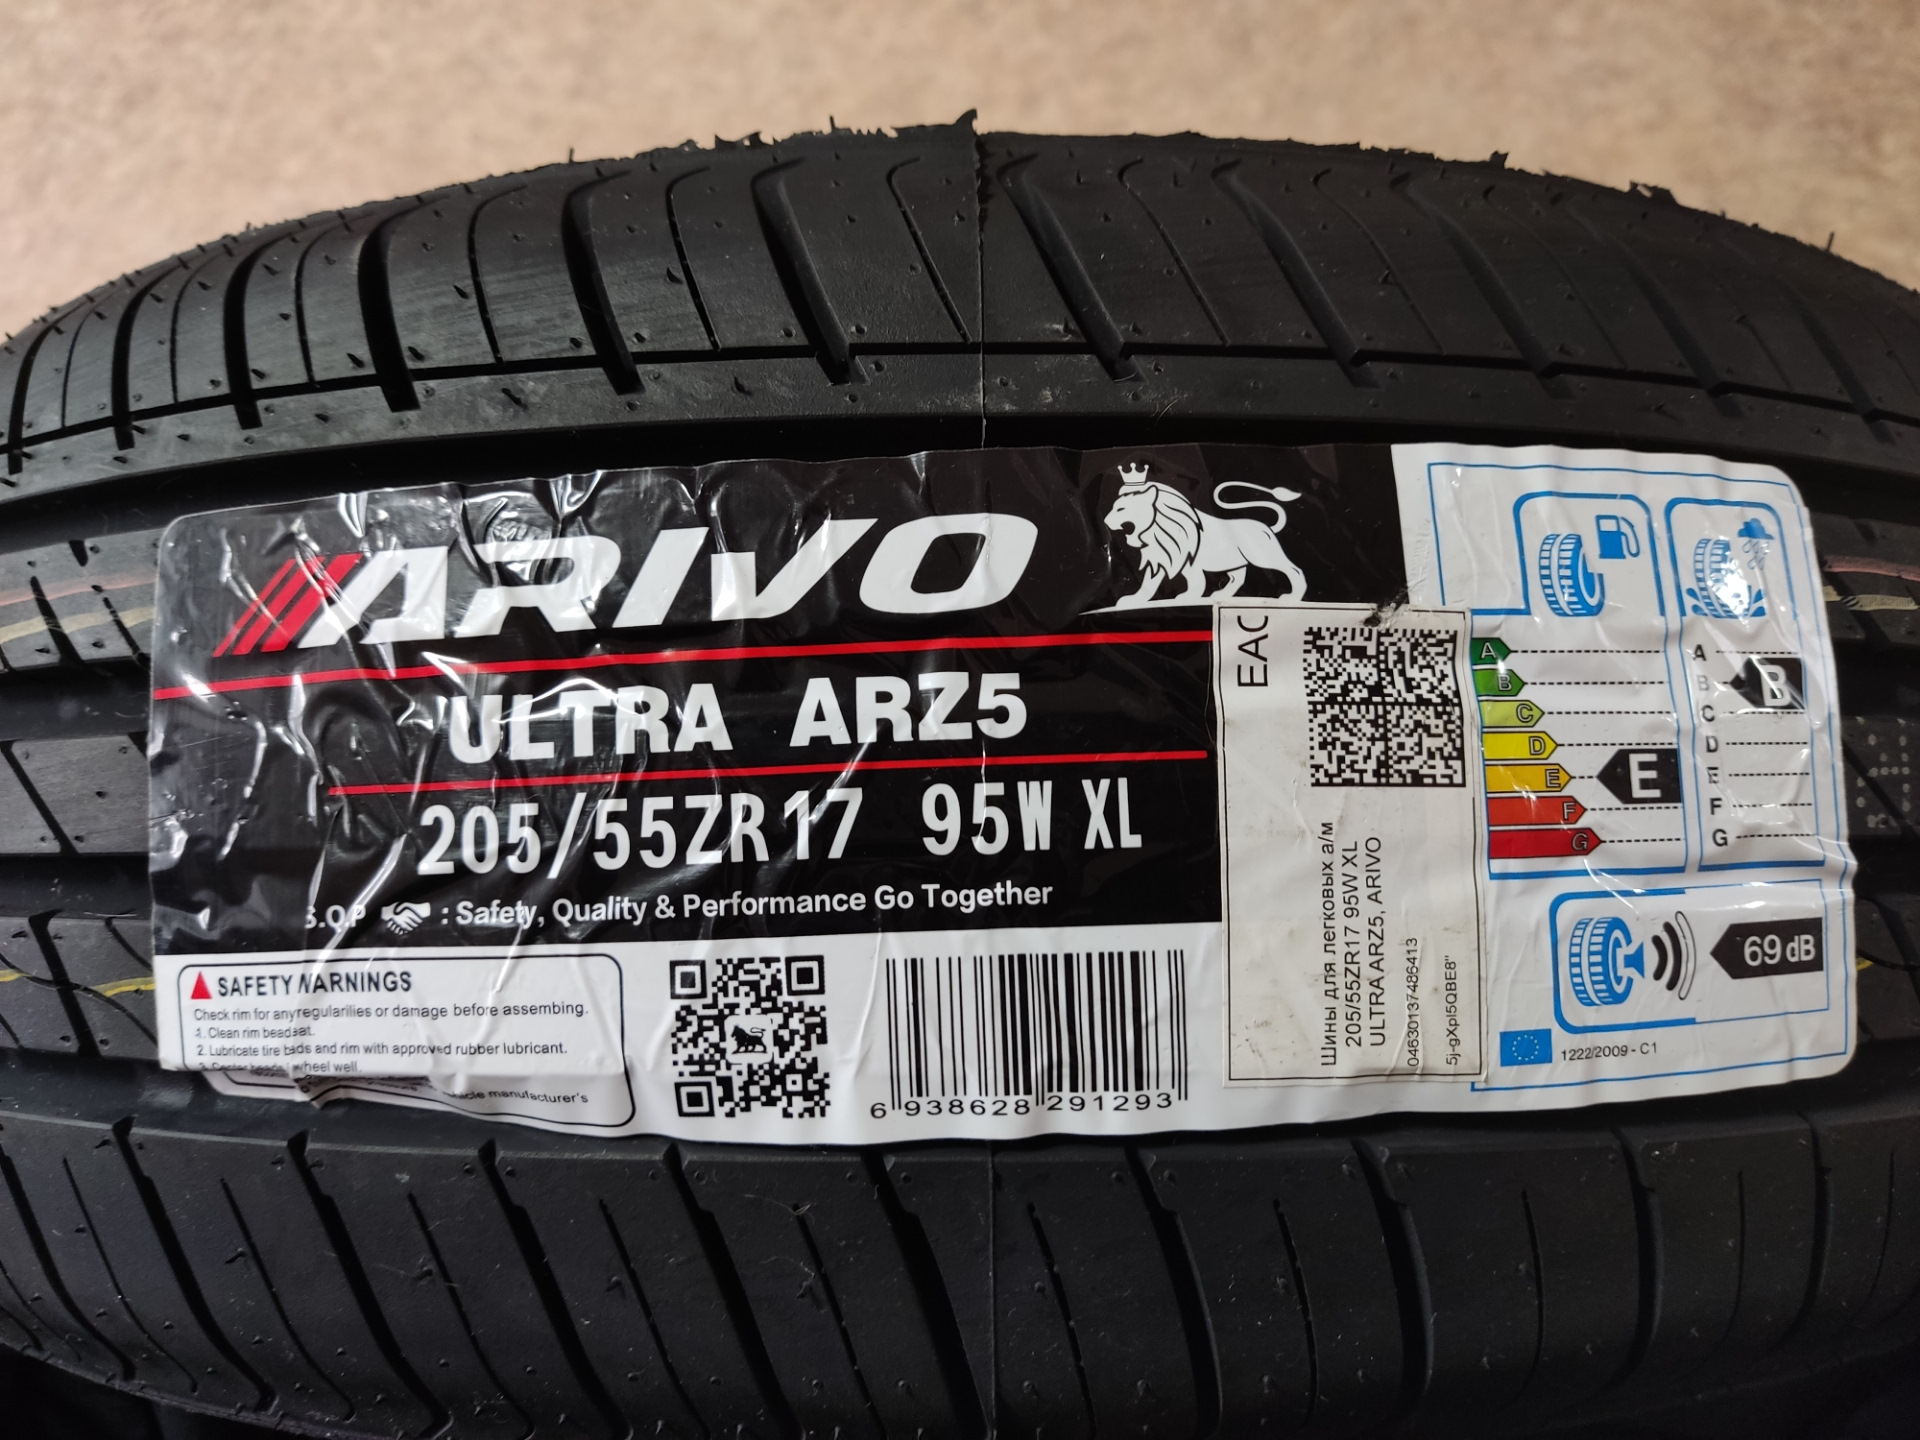 Arivo ultra arz4 отзывы. Arivo Ultra arz5 шина. Arivo Ultra arz5 215/45 r18. Arivo Ultra arz5 315/35r20 110w XL. 285/50r20 лето arivo Ultra arz5.